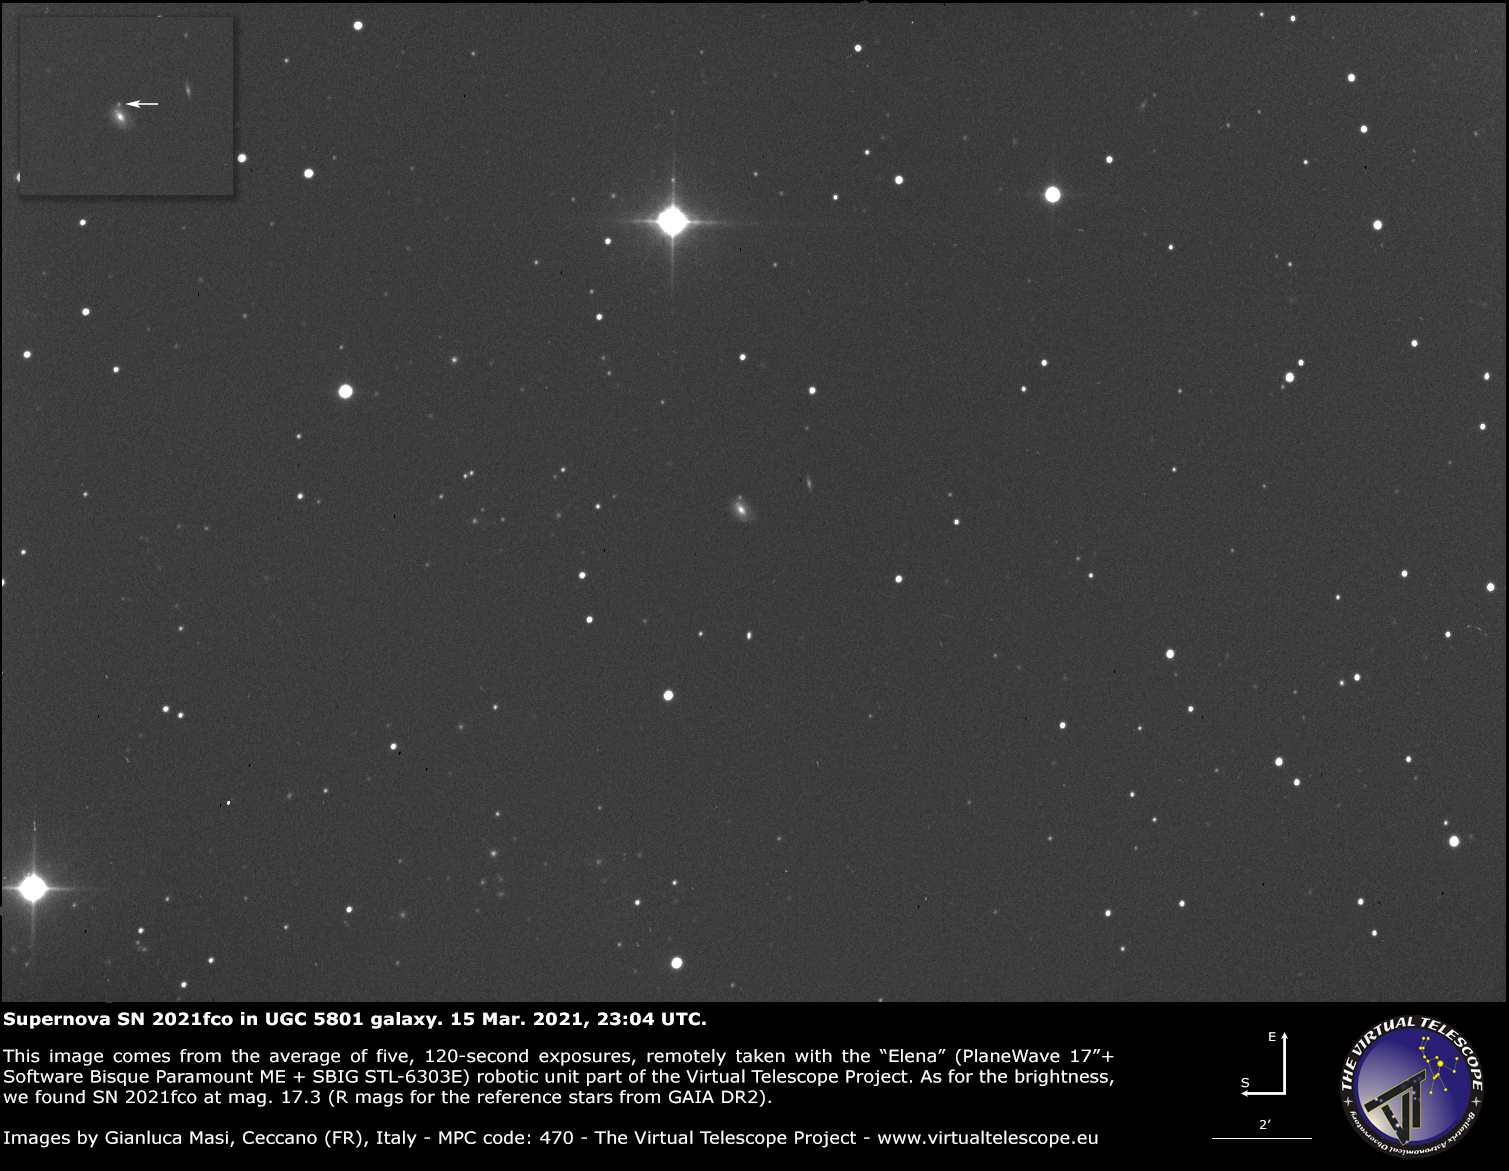 Supernova SN 2021fco in UGC 5801 galaxy: 15 Mar. 2021.